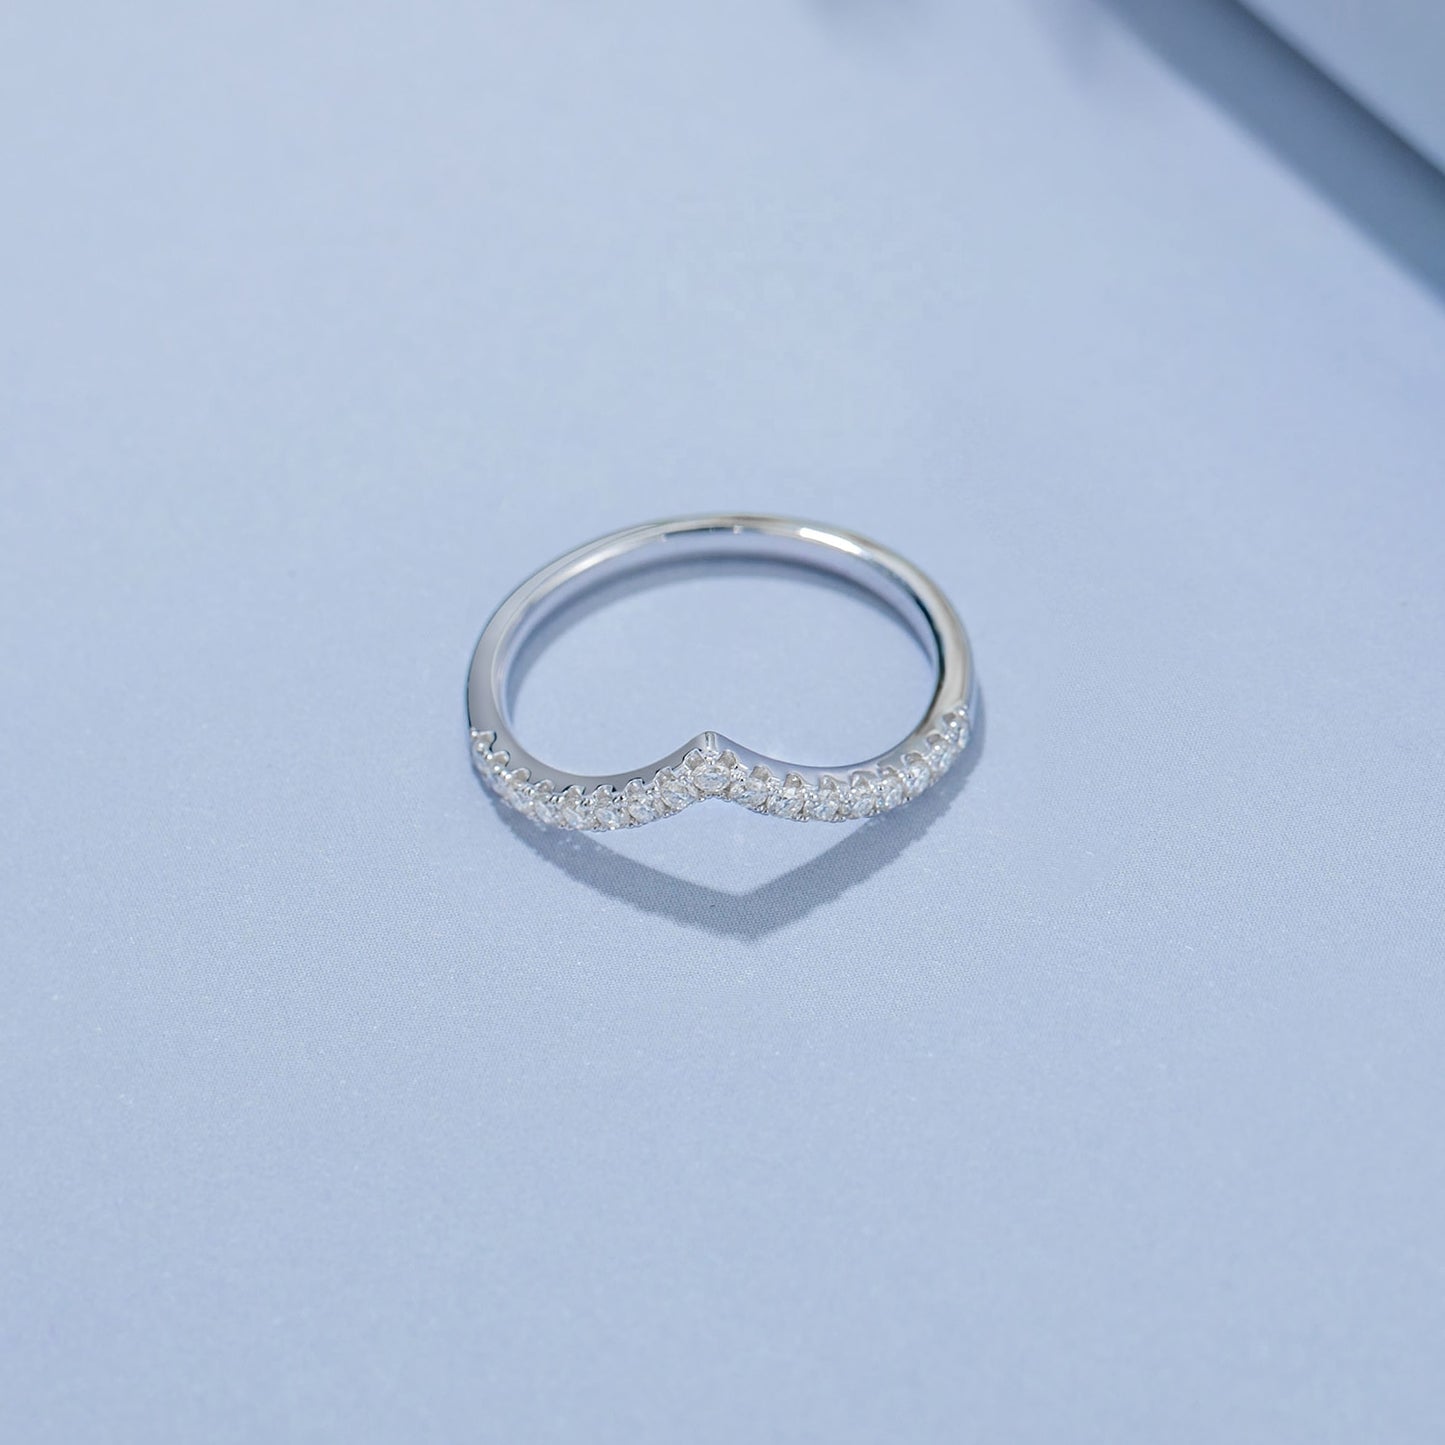 Moissanite Diamond Rings Jewelry Women Engagement Ring Sterling Silver